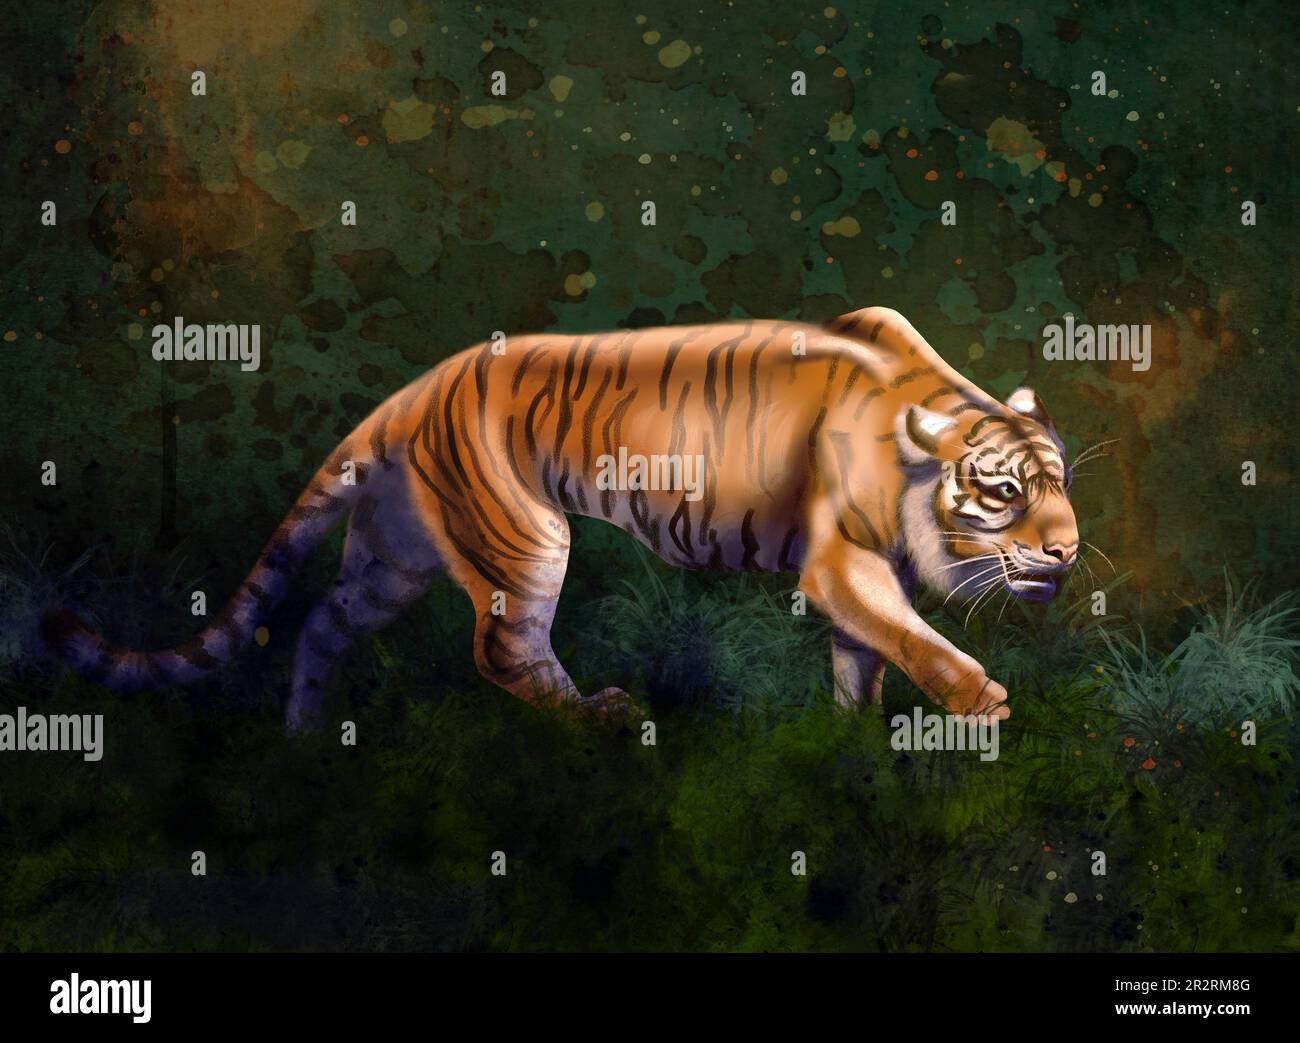 Digital illustration - a bright orange tiger walking in dark jungles Stock Photo